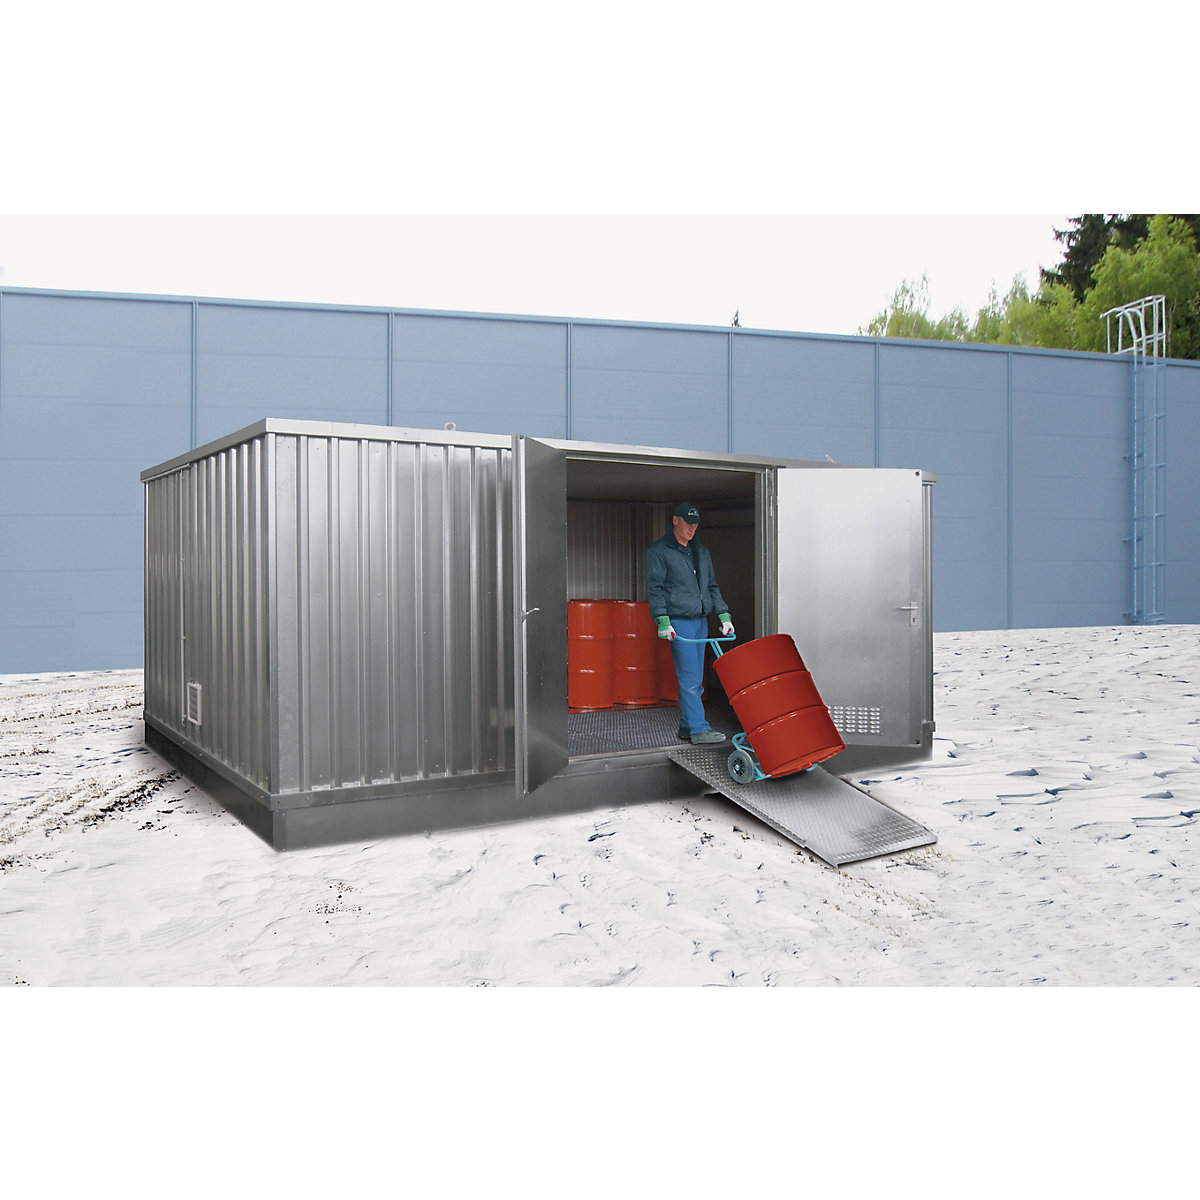 Skladovací kontejner pro hořlavá média, s izolací proti chladu - LaCont